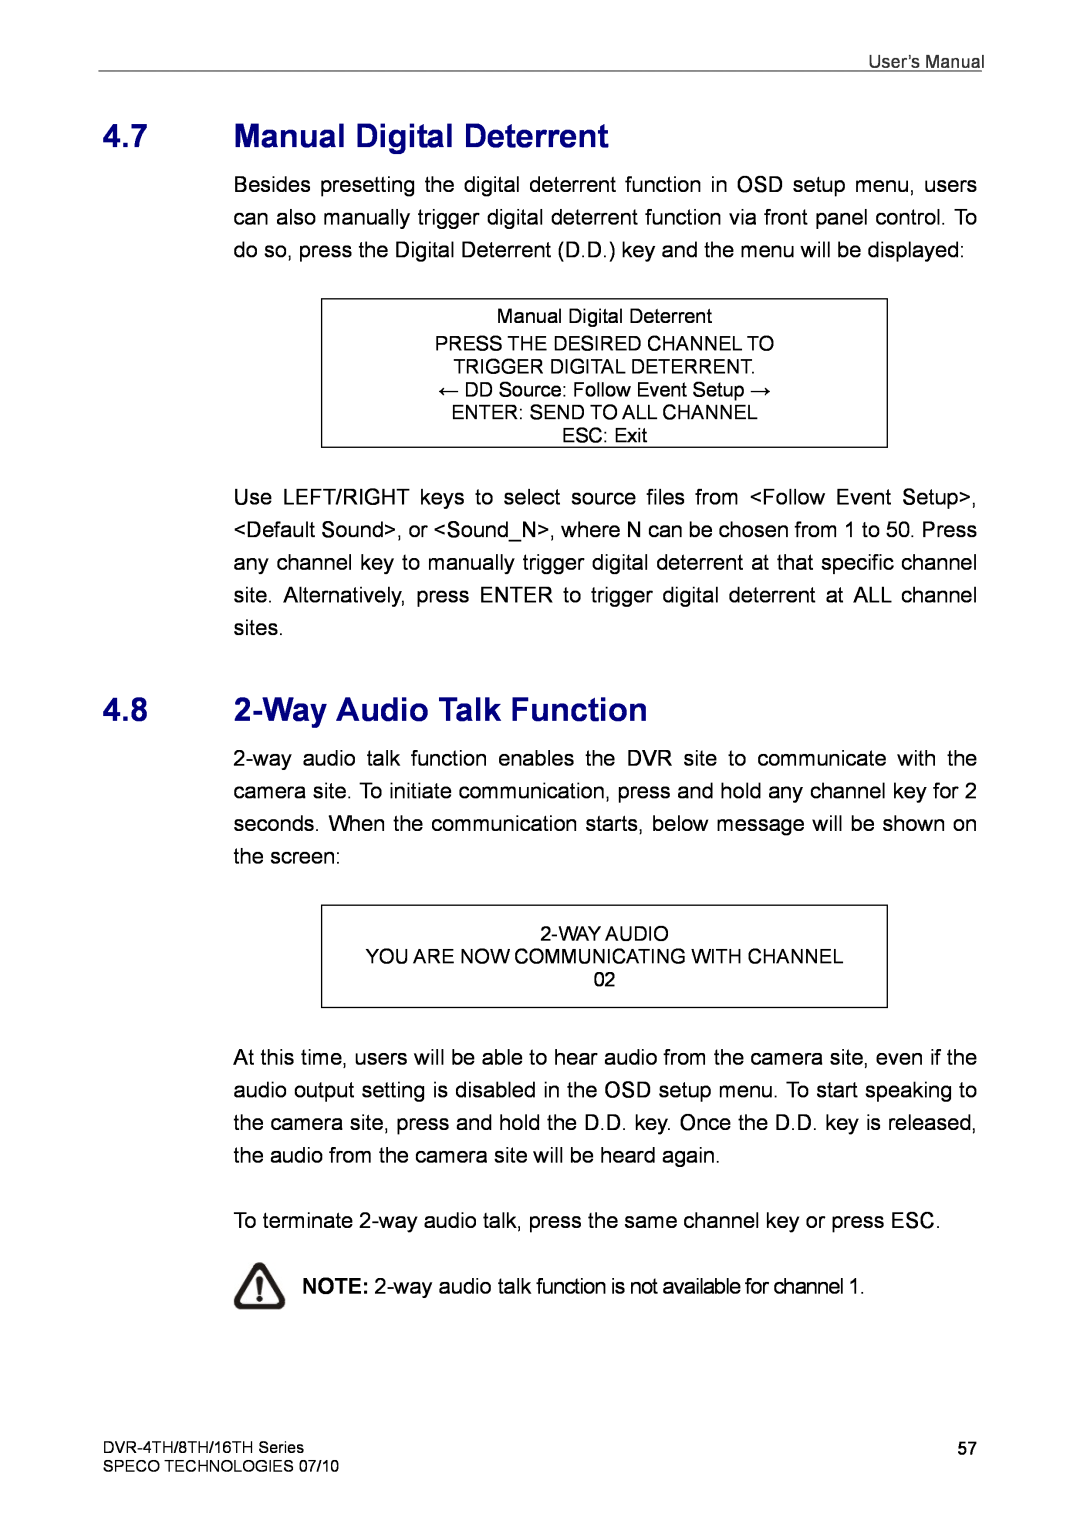 Speco Technologies 4TH, 8TH, 16TH user manual Manual Digital Deterrent, 4.8 2-Way Audio Talk Function 